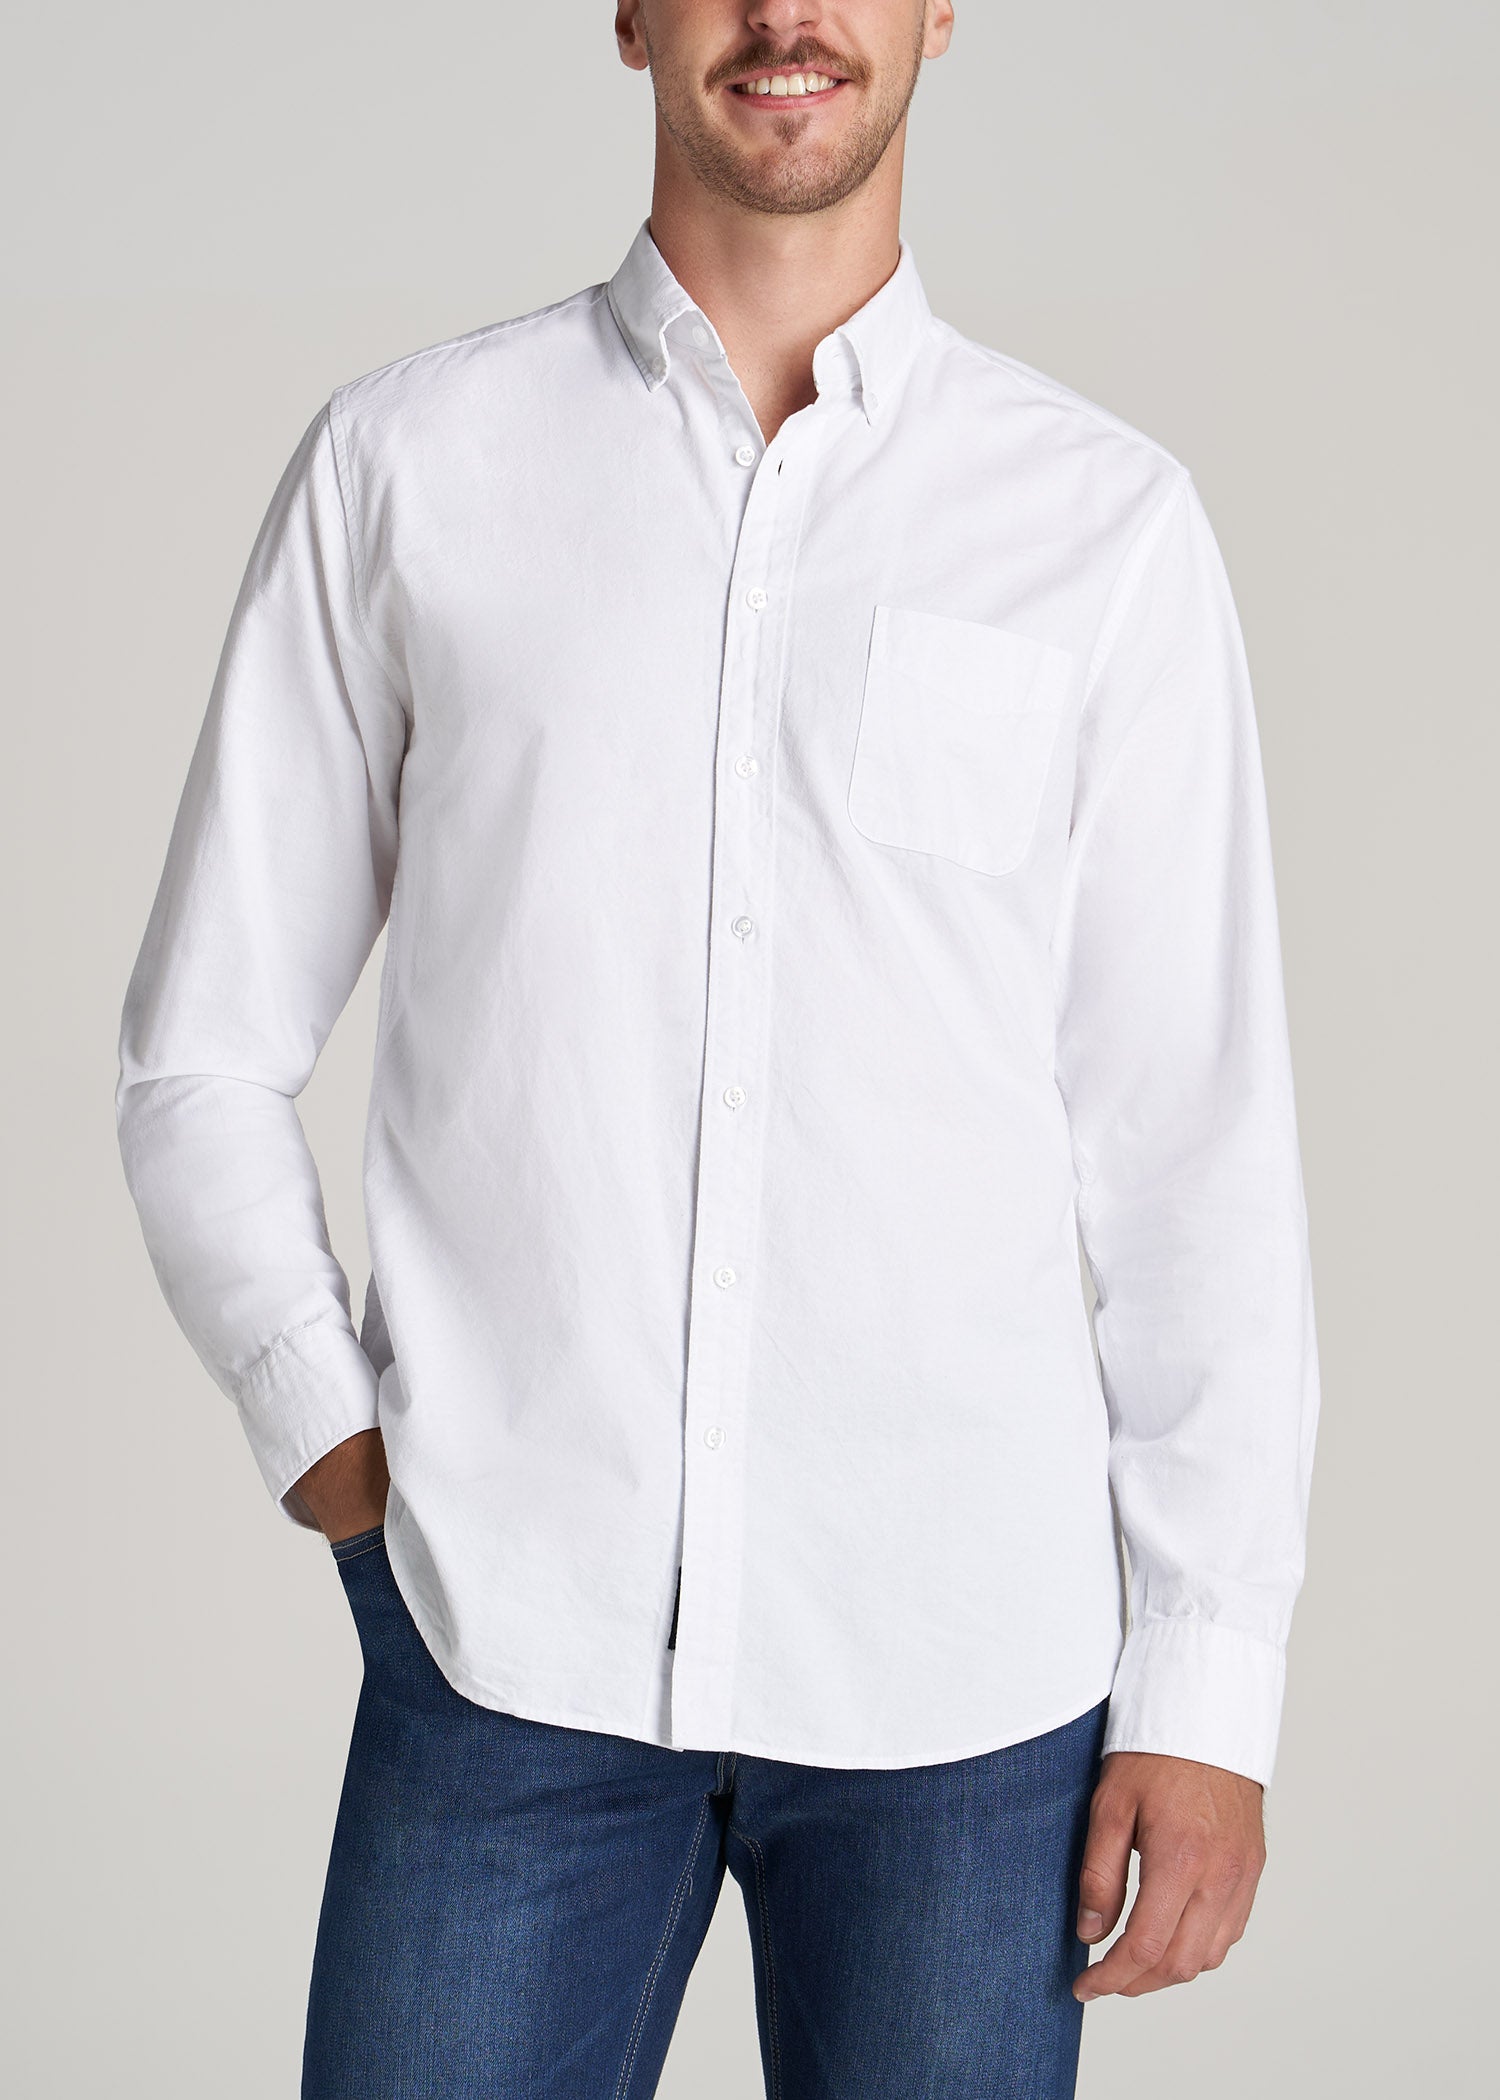 Men's Button-Down Front Shirts